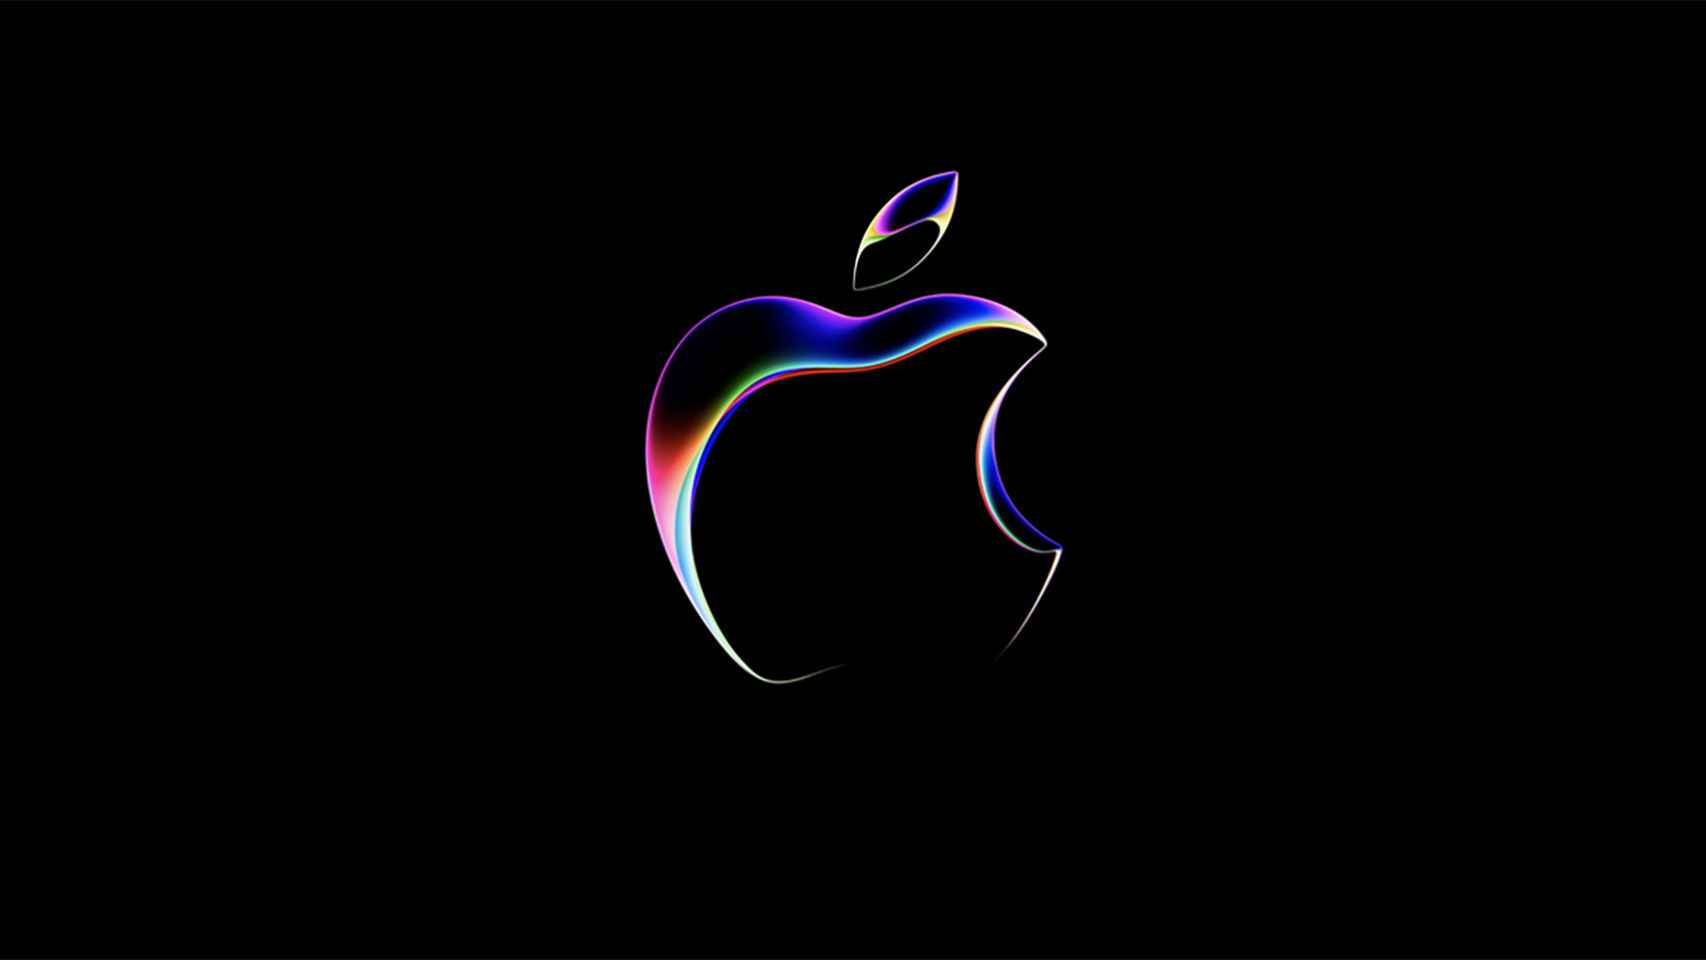 Imagen promocional de Apple.